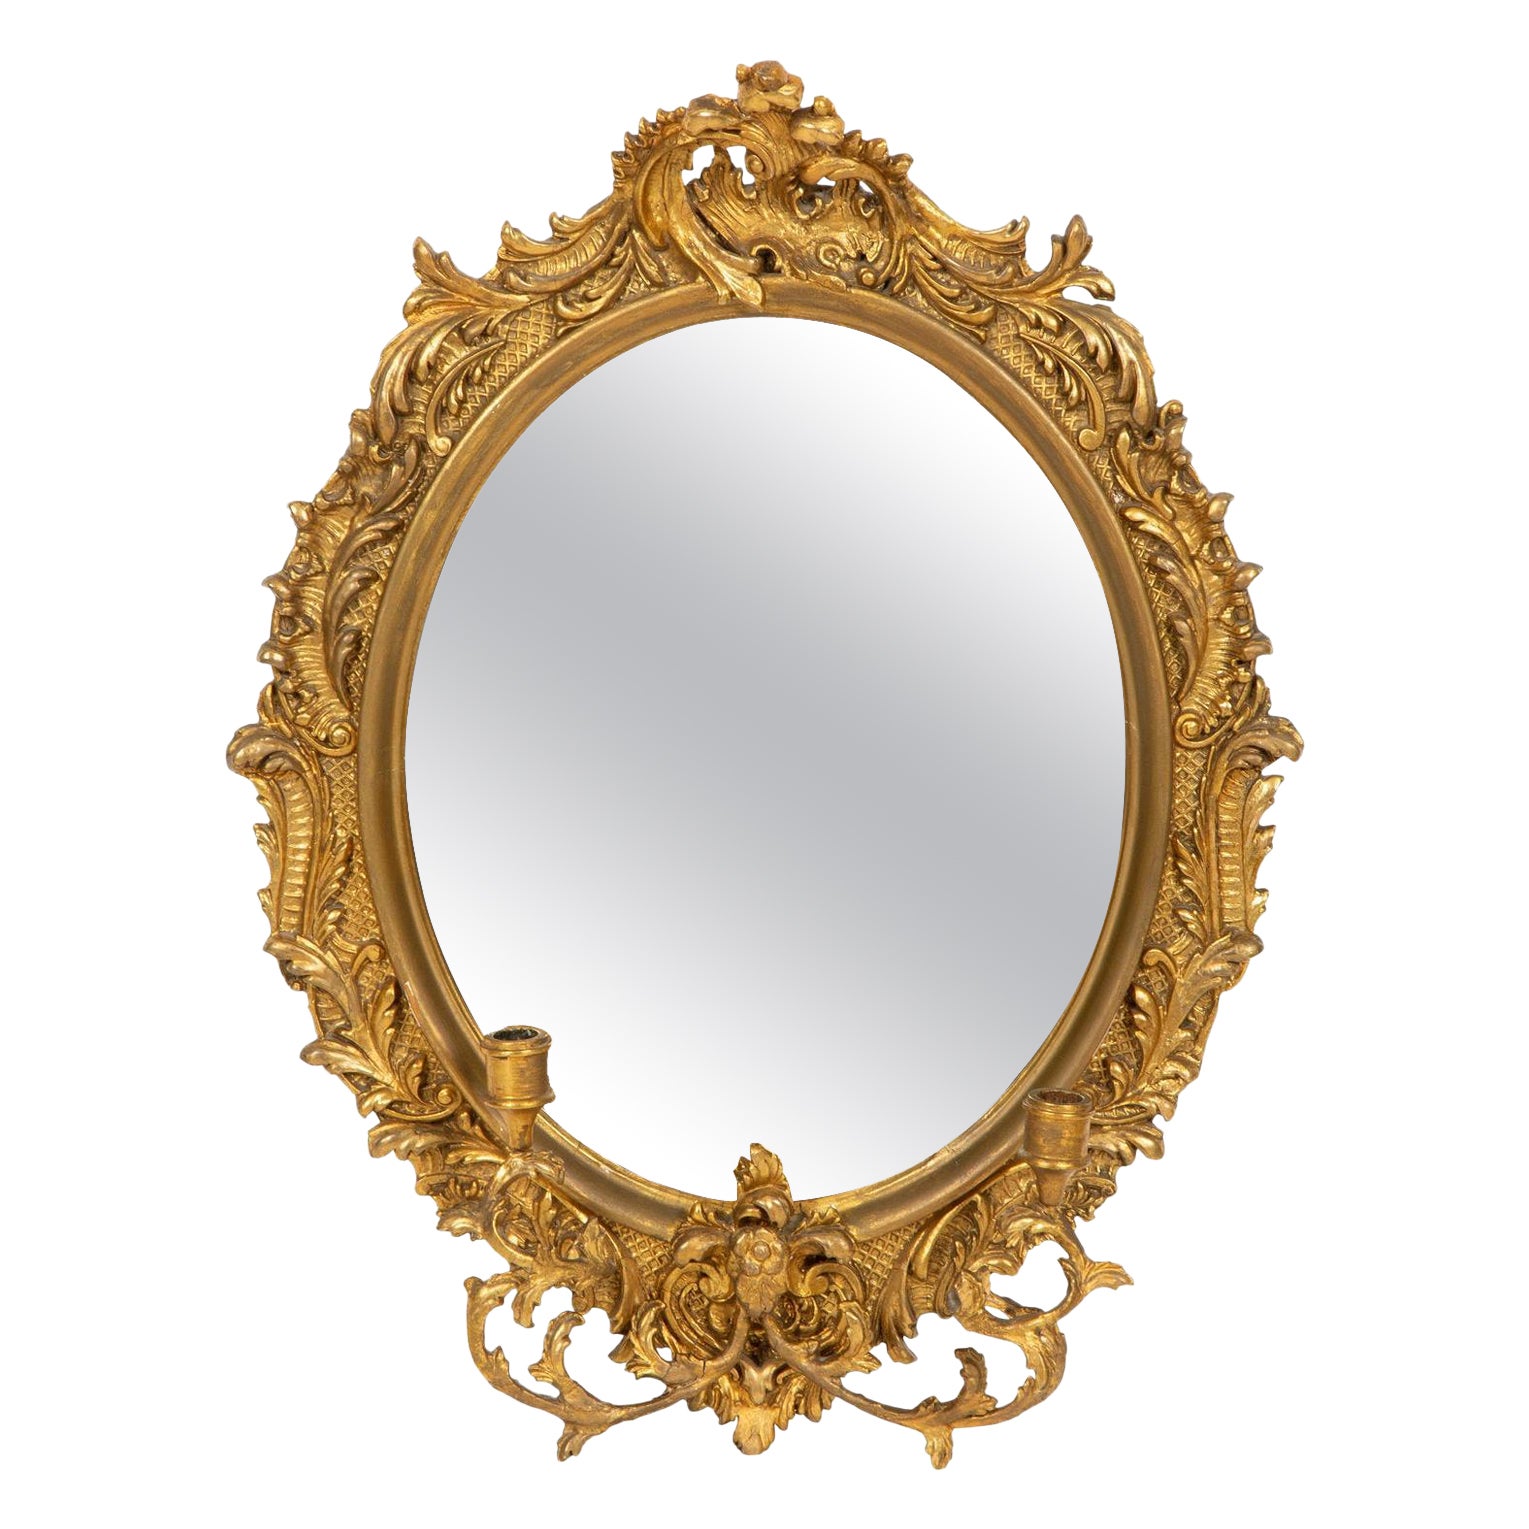 Rococo-Style Carved Giltwood Girandole Mirror, 19th Century